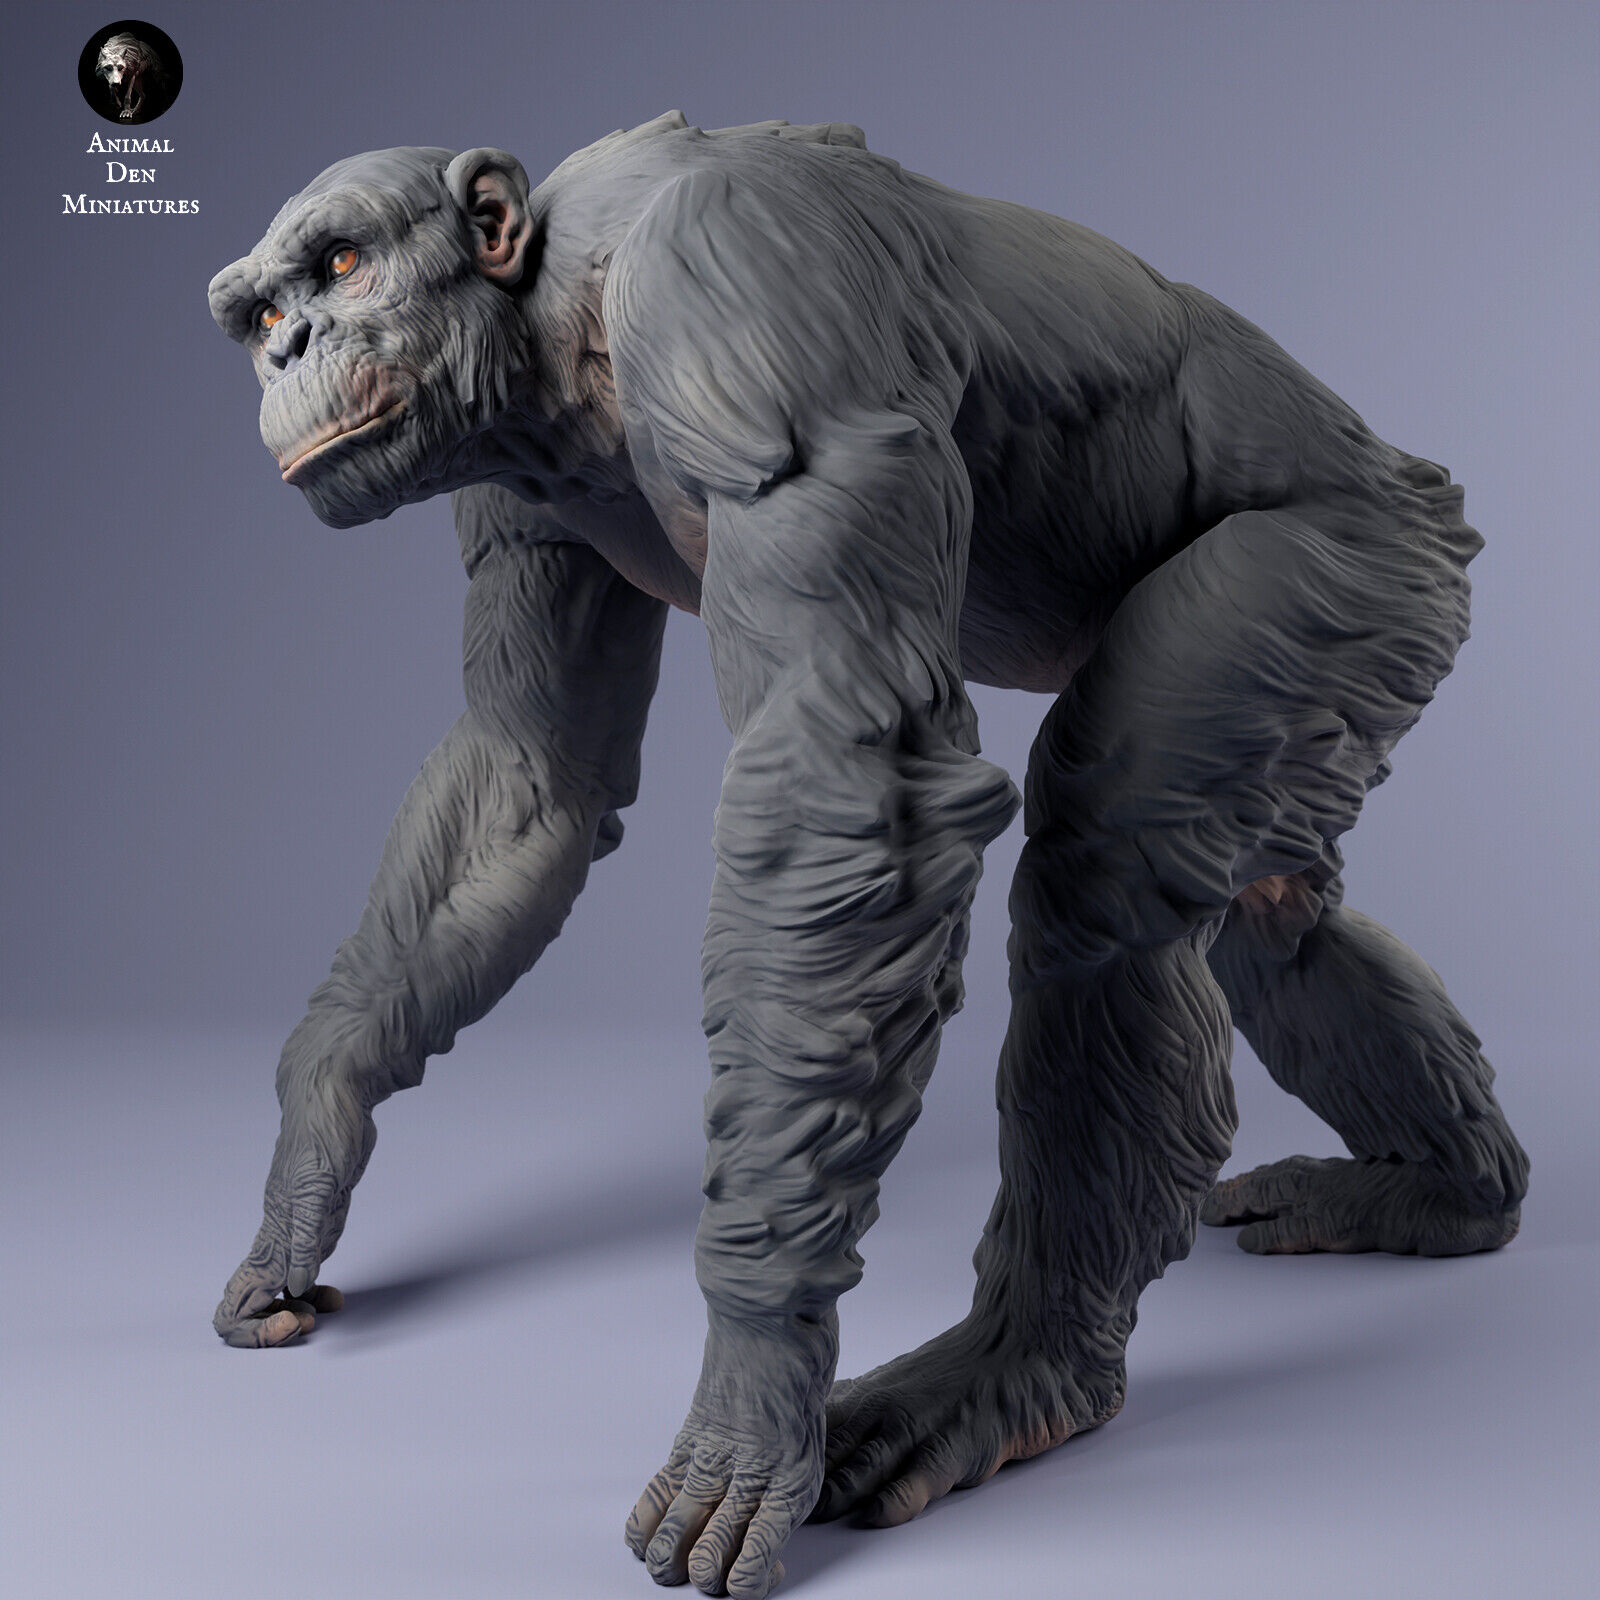 Breyer size artist resin companion animal figurine male chimpanzee walking